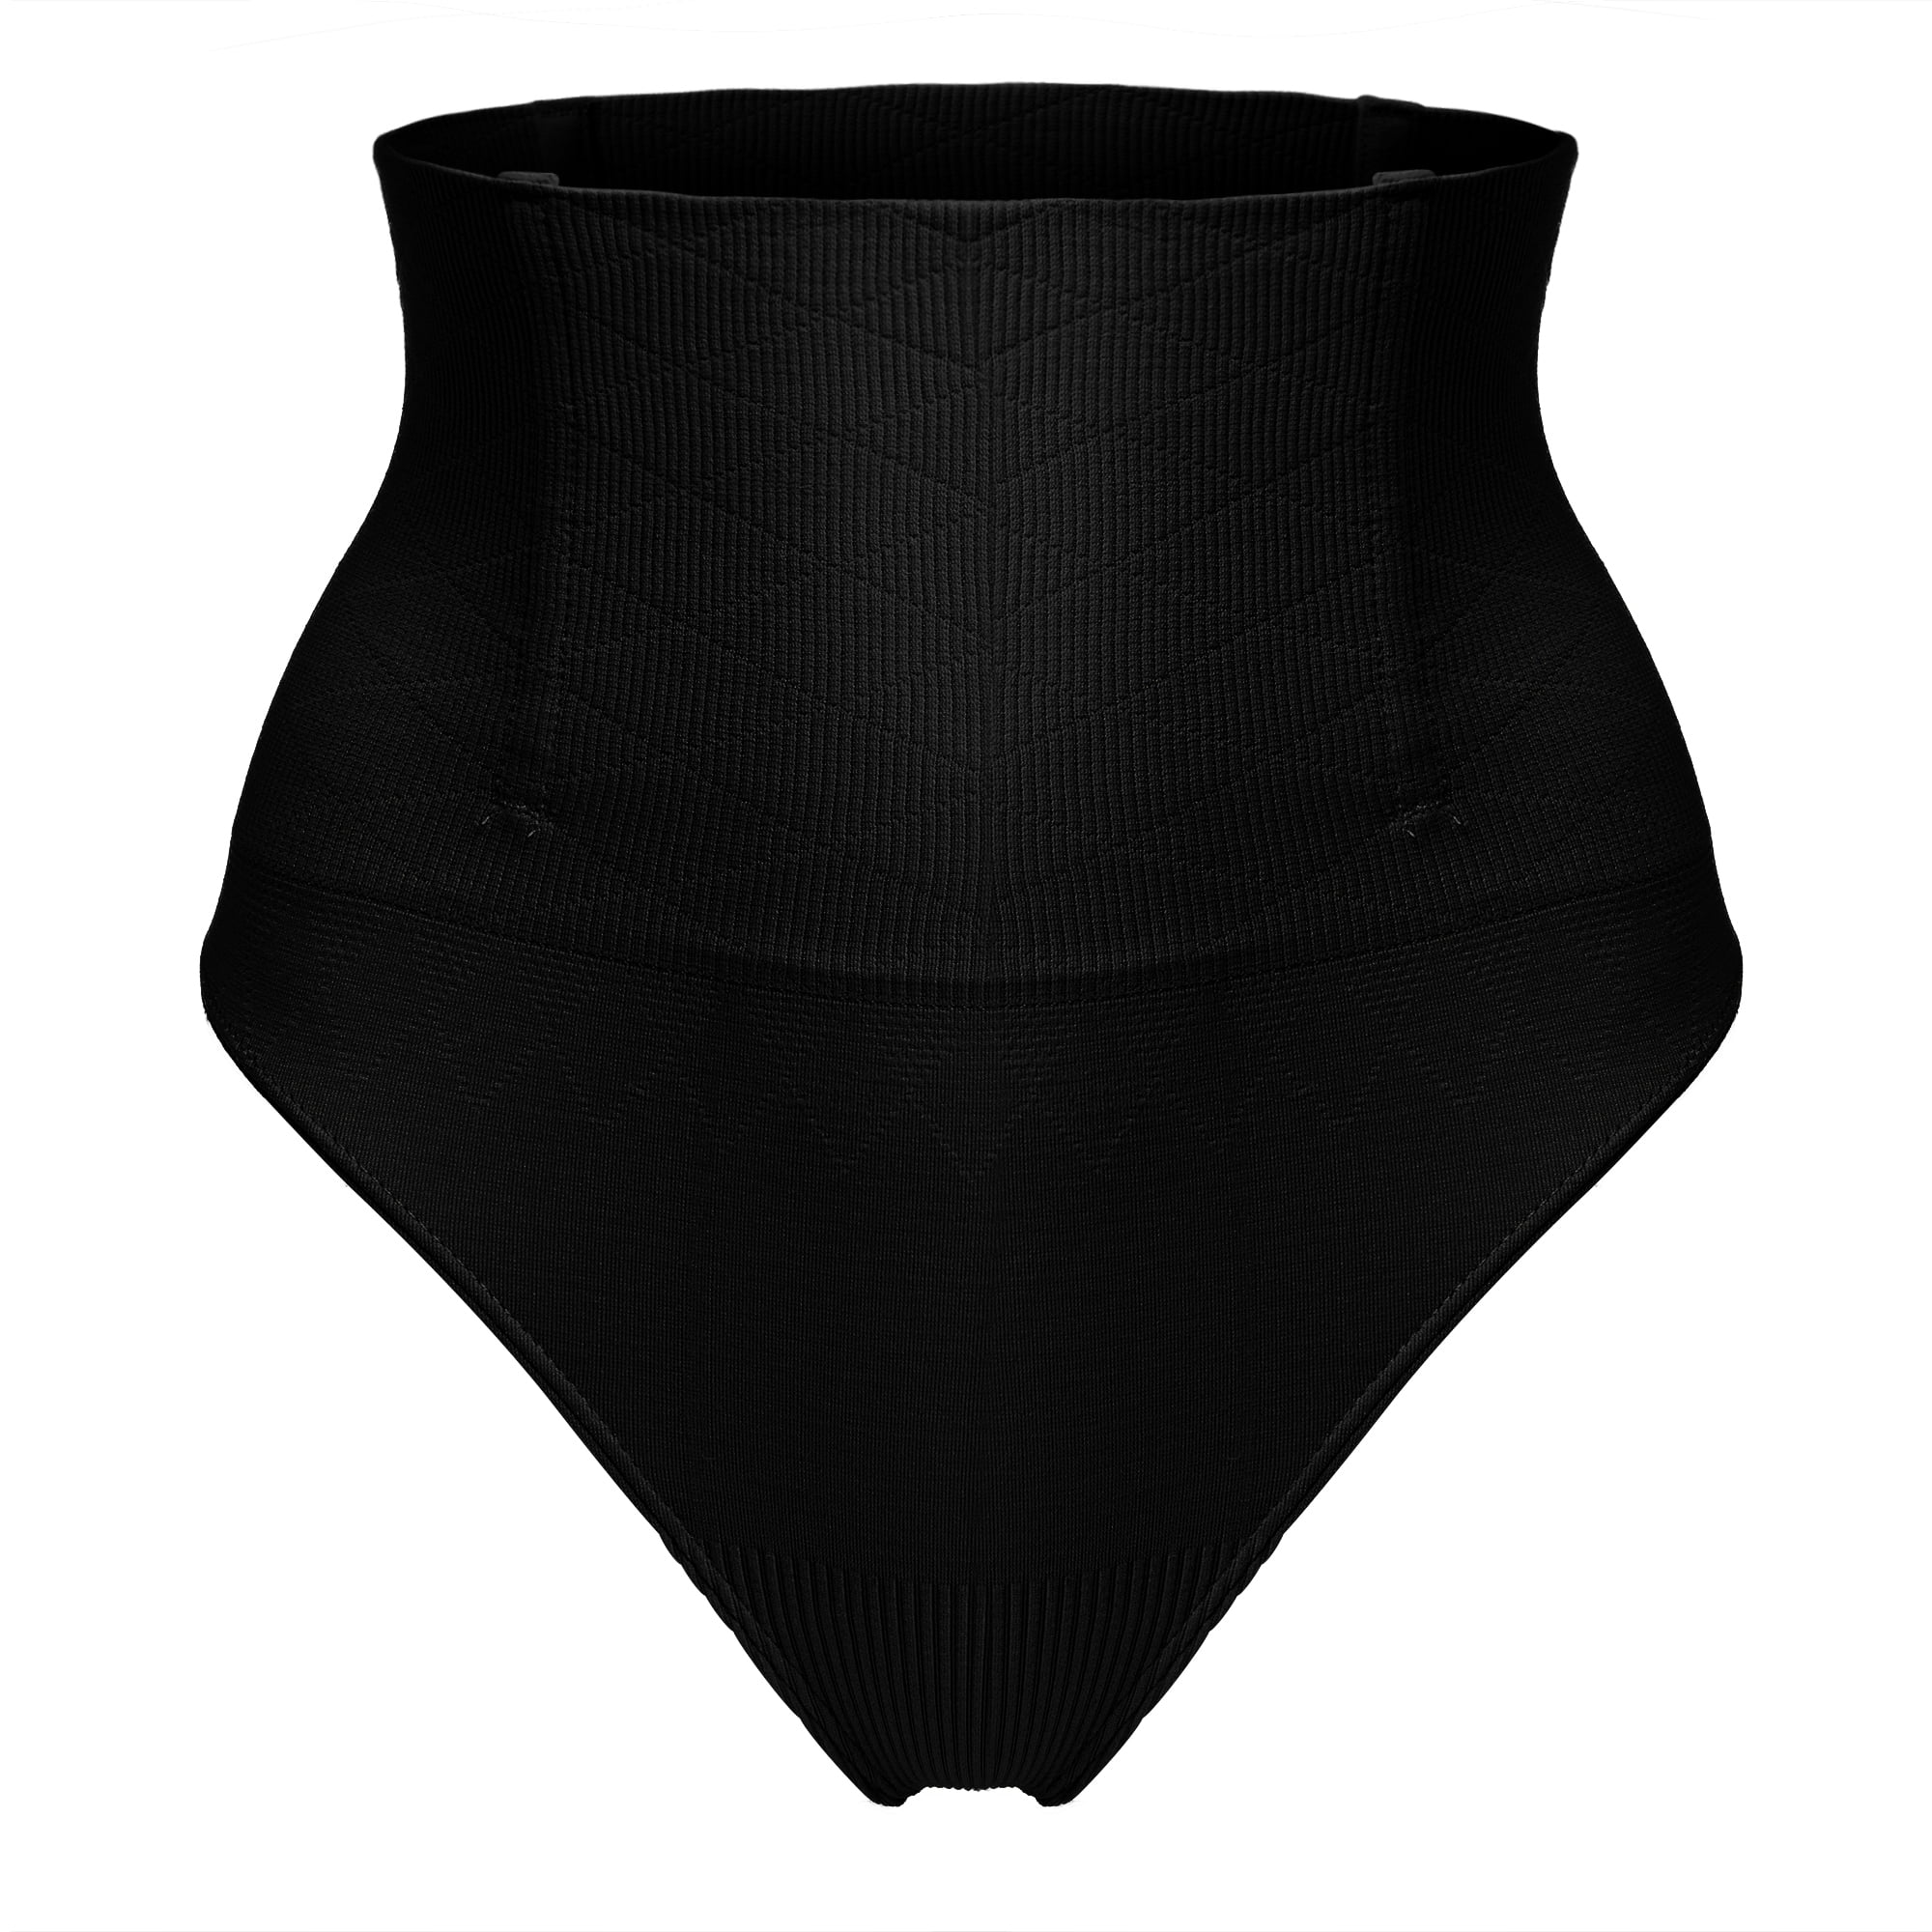 Yummie Ladies' Size XL High Waist Shaping Brief, 2-pack, Black (1) Nude (1)  